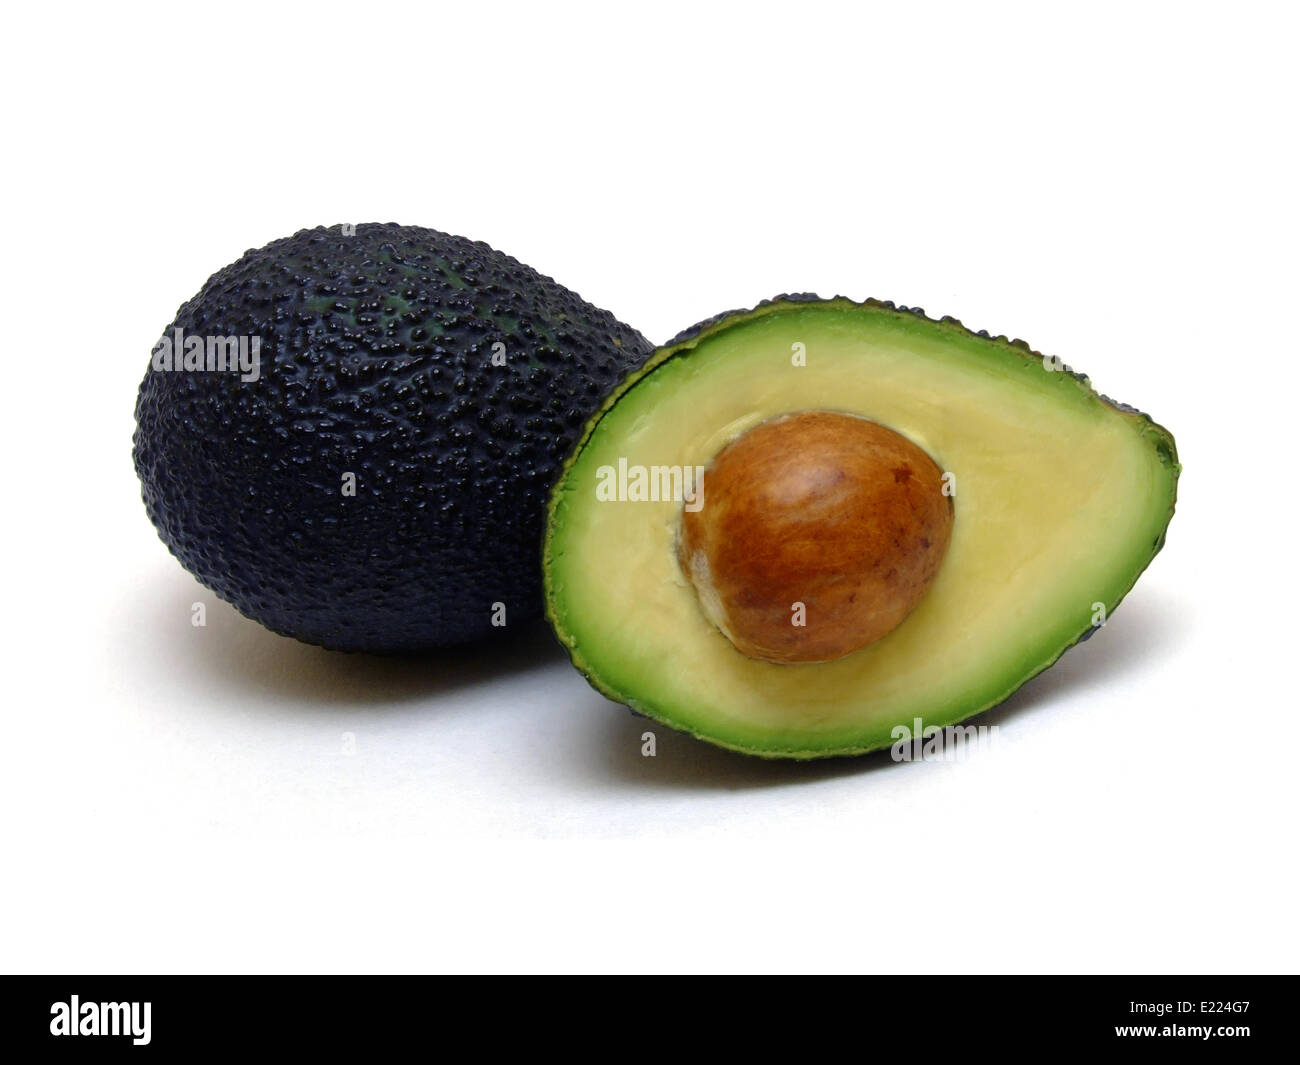 Avocado (Persea americana) Stock Photo